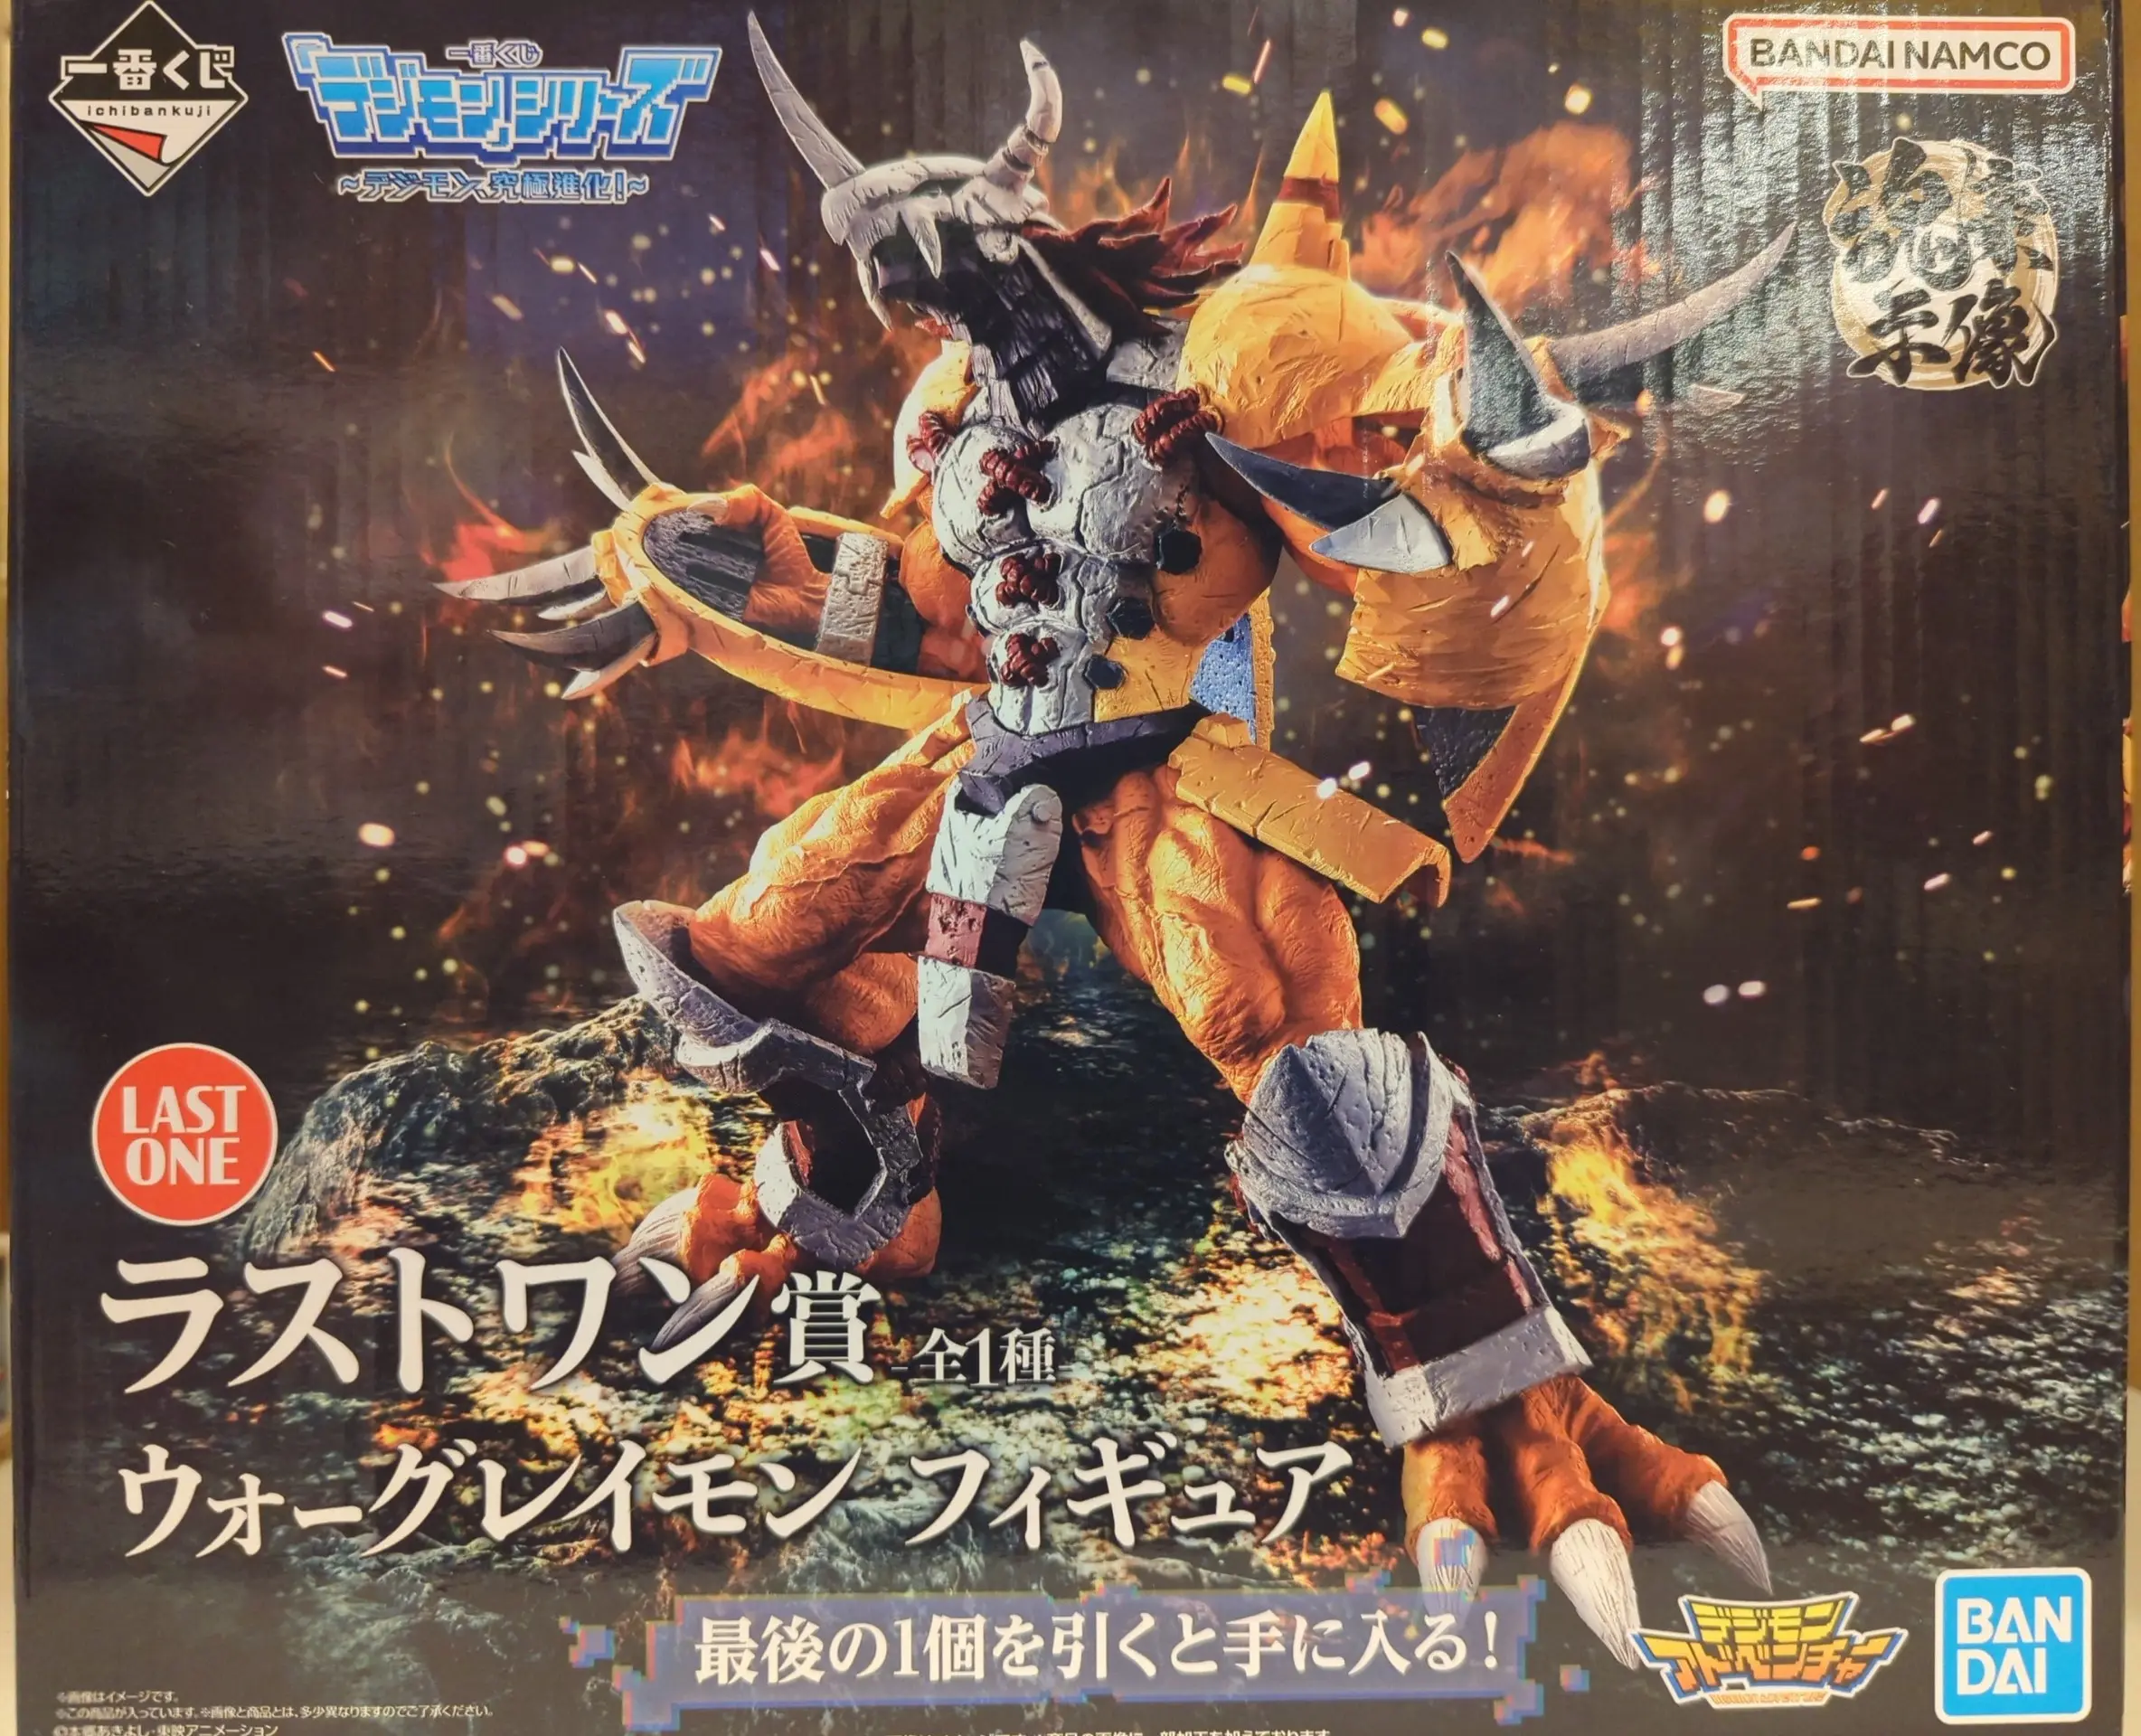 Ichiban Kuji - Soul Gorgeous Statue - Digimon: Digital Monsters / WarGreymon